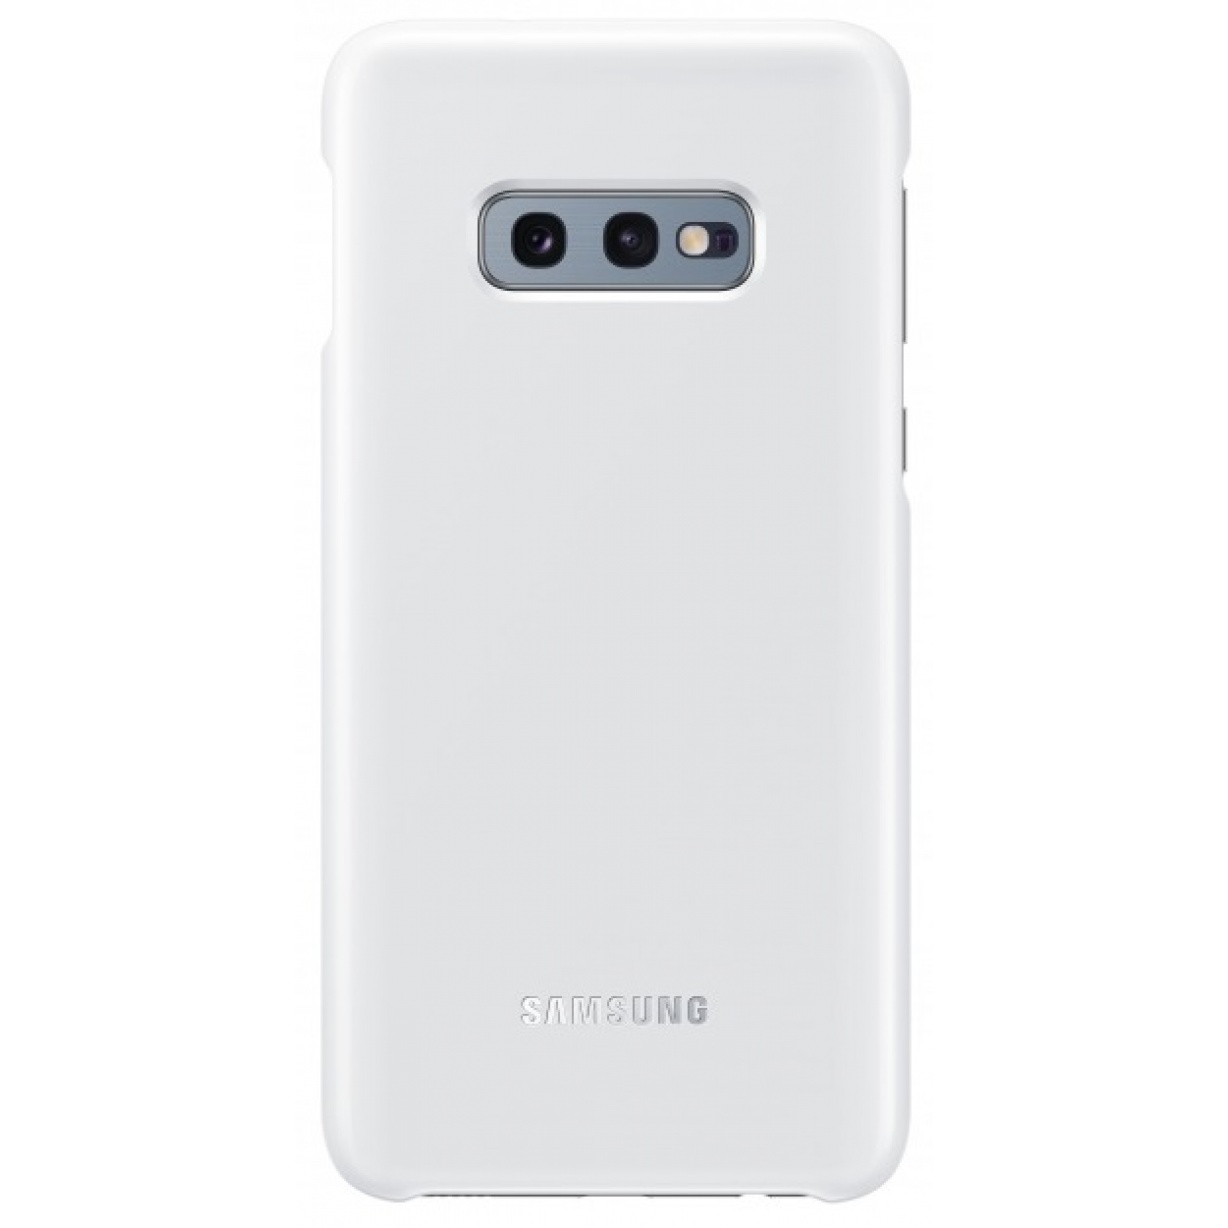 Nugarėlė G970 Samsung Galaxy S10e LED Cover White